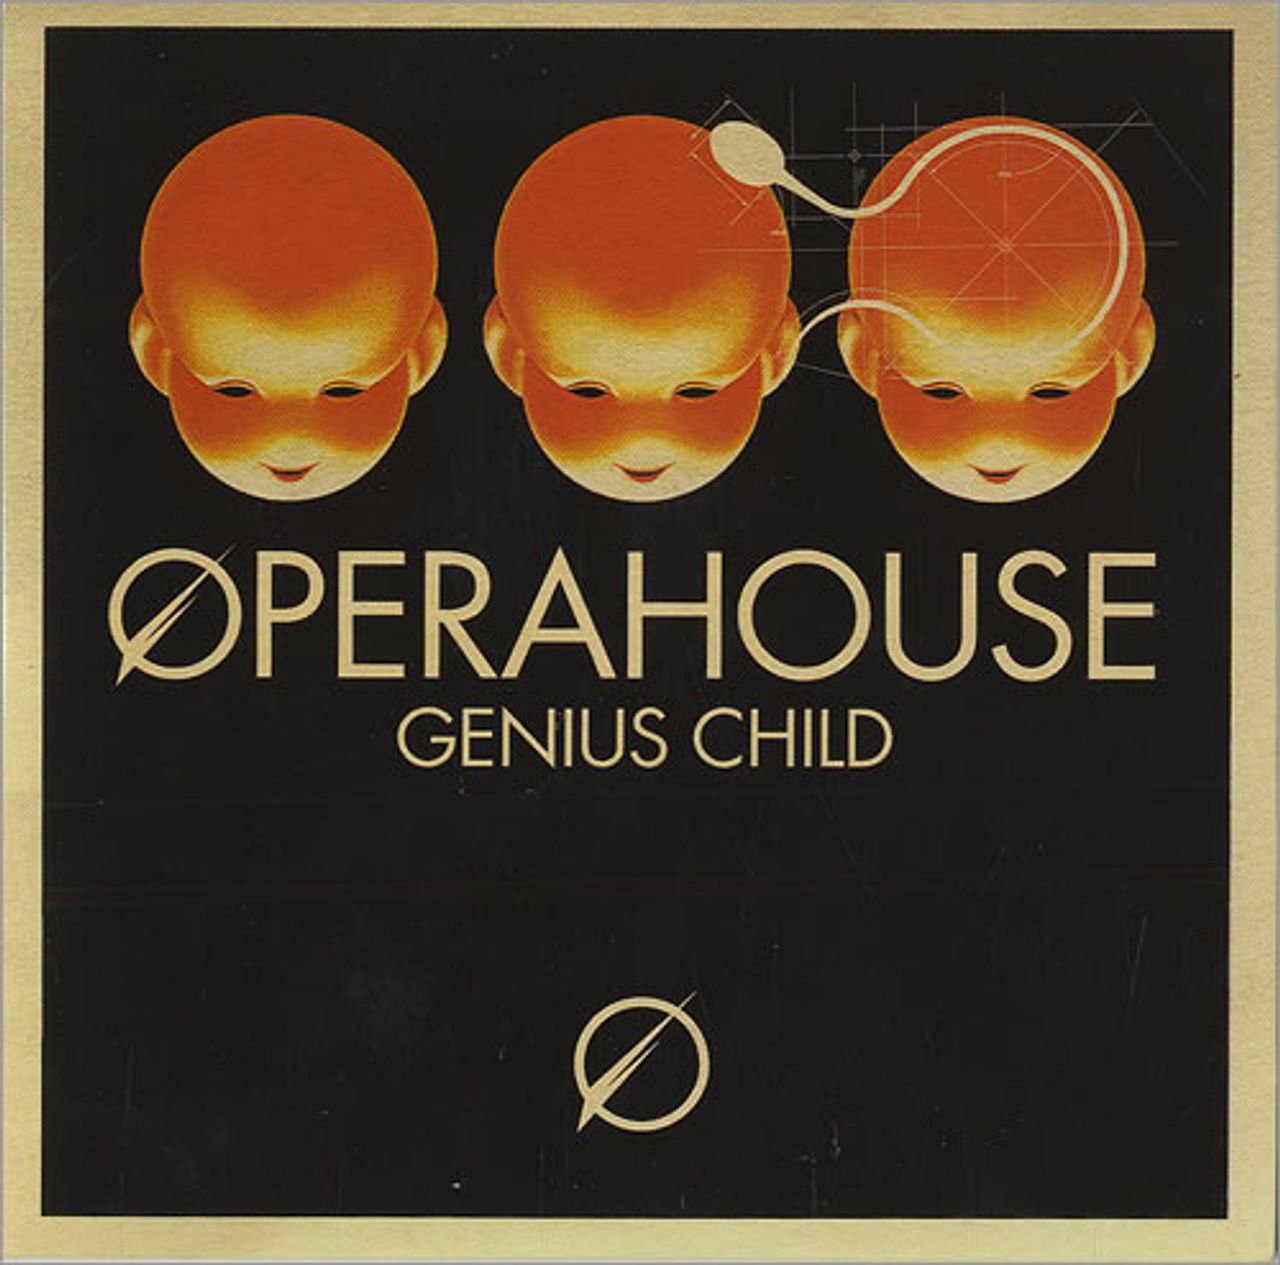 Operahouse Genius Child UK Promo CD single (CD5 / 5") UKMARRA008PROMO